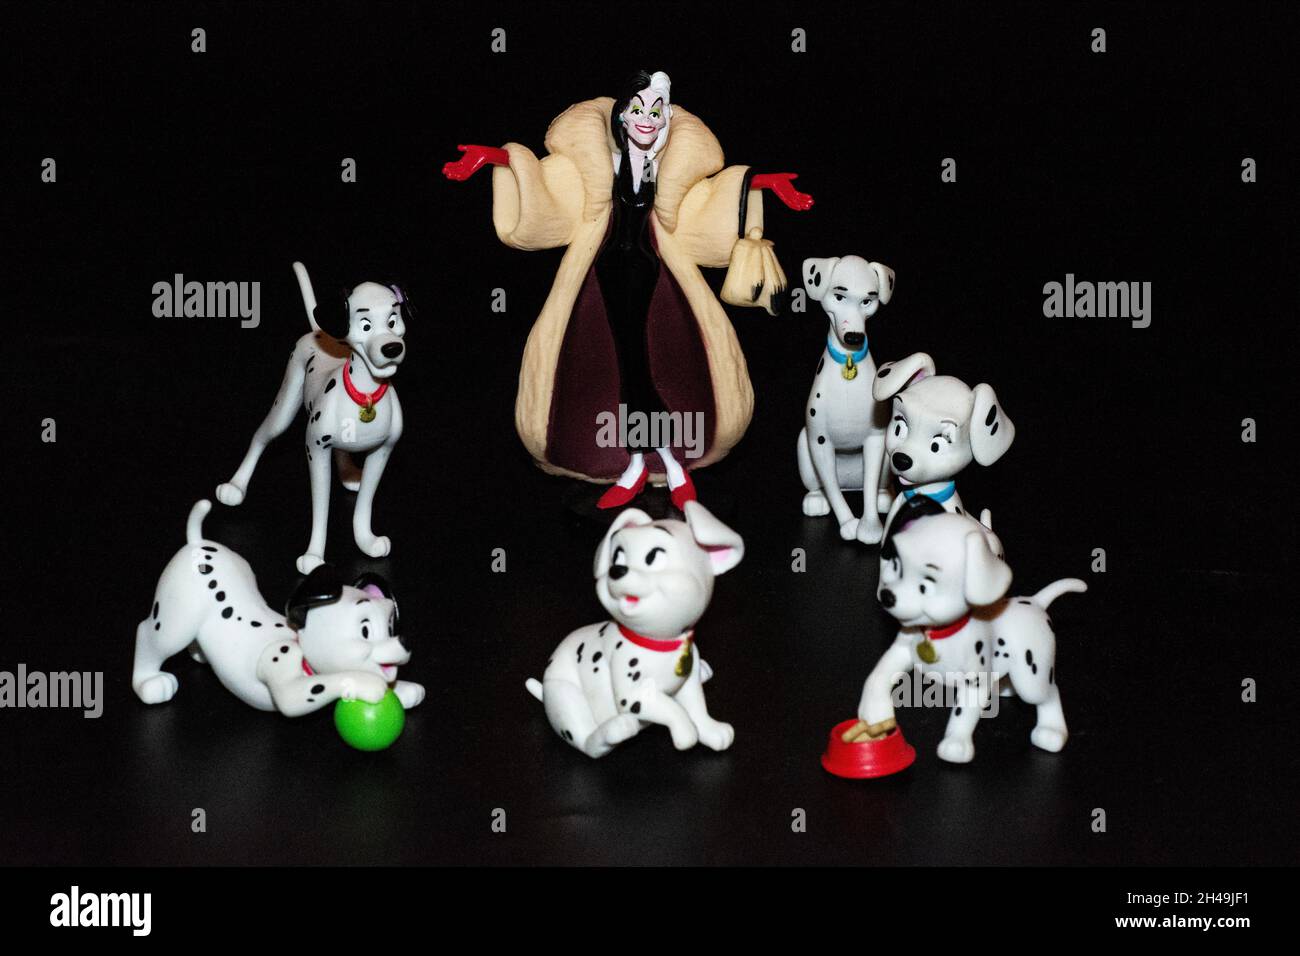 Cruella de vil with 101 Dalmatian figures, 101 Dalmatian figure from Disney Store Stock Photo